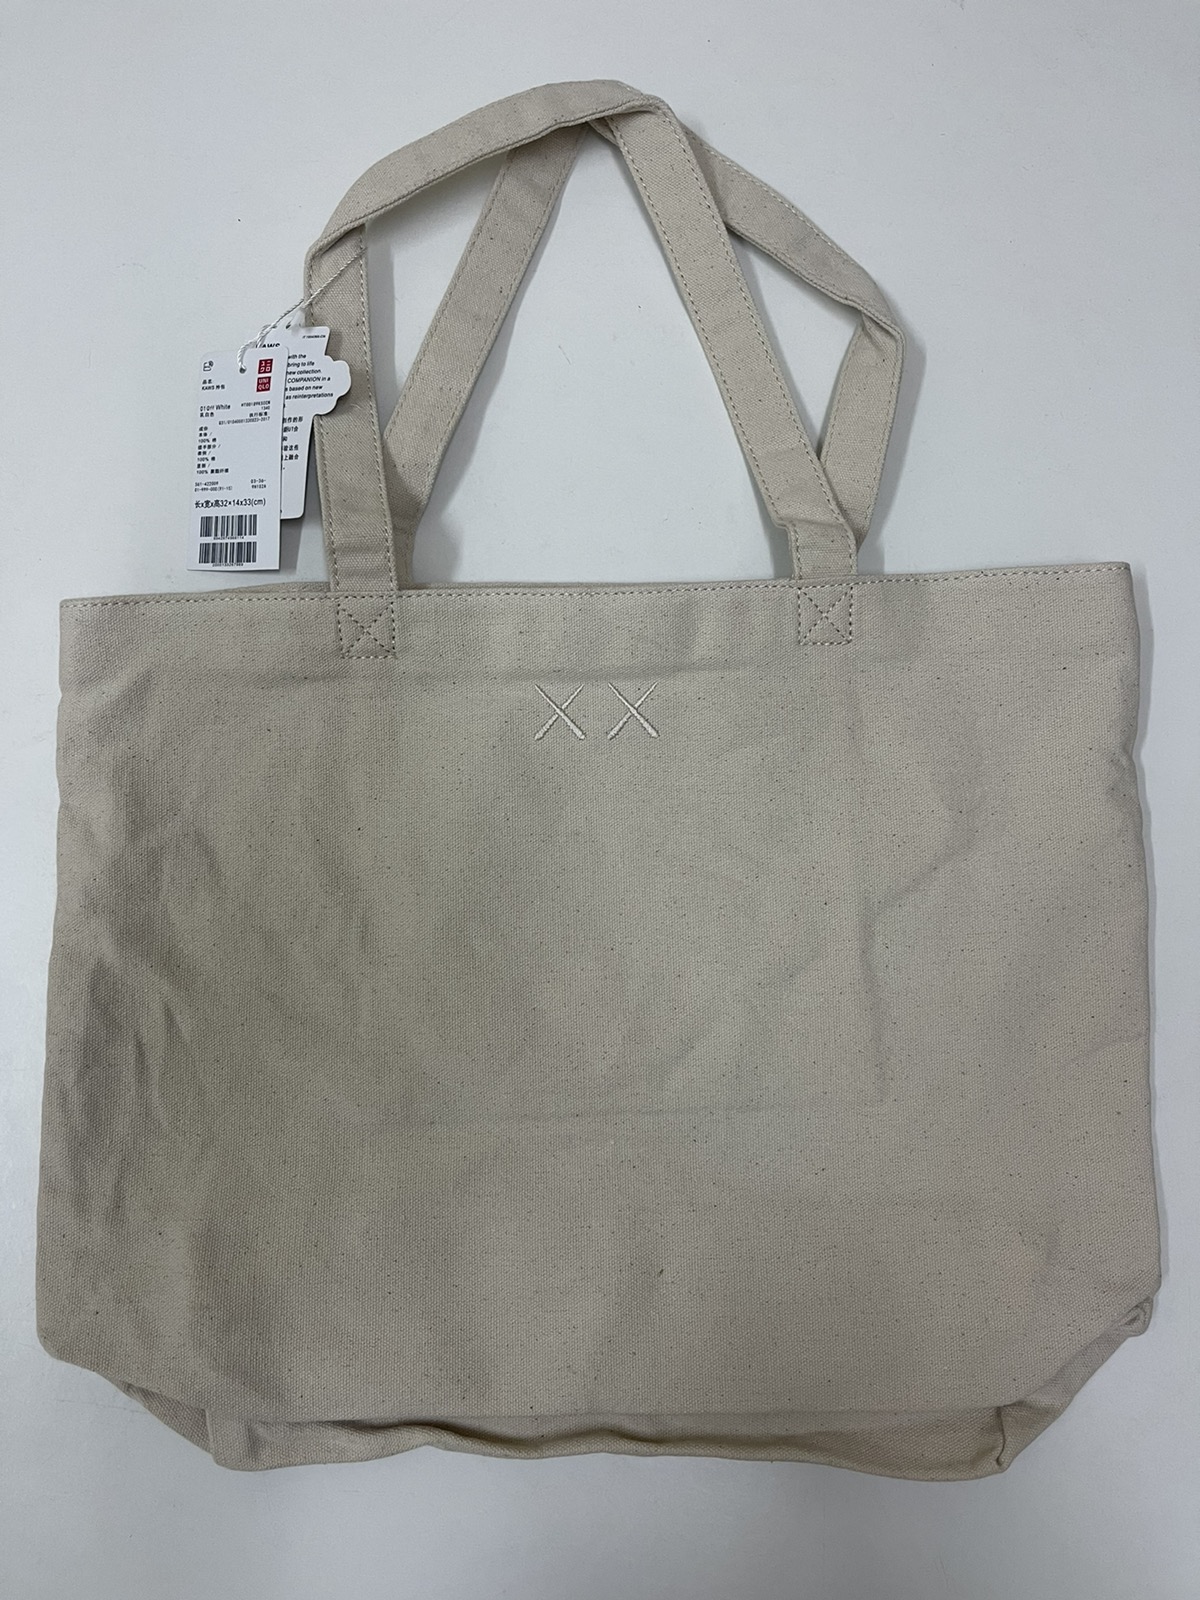 Vintage - Kaws Tote Bag Limited Edition / Uniqlo / Evangelion / Rare - 9